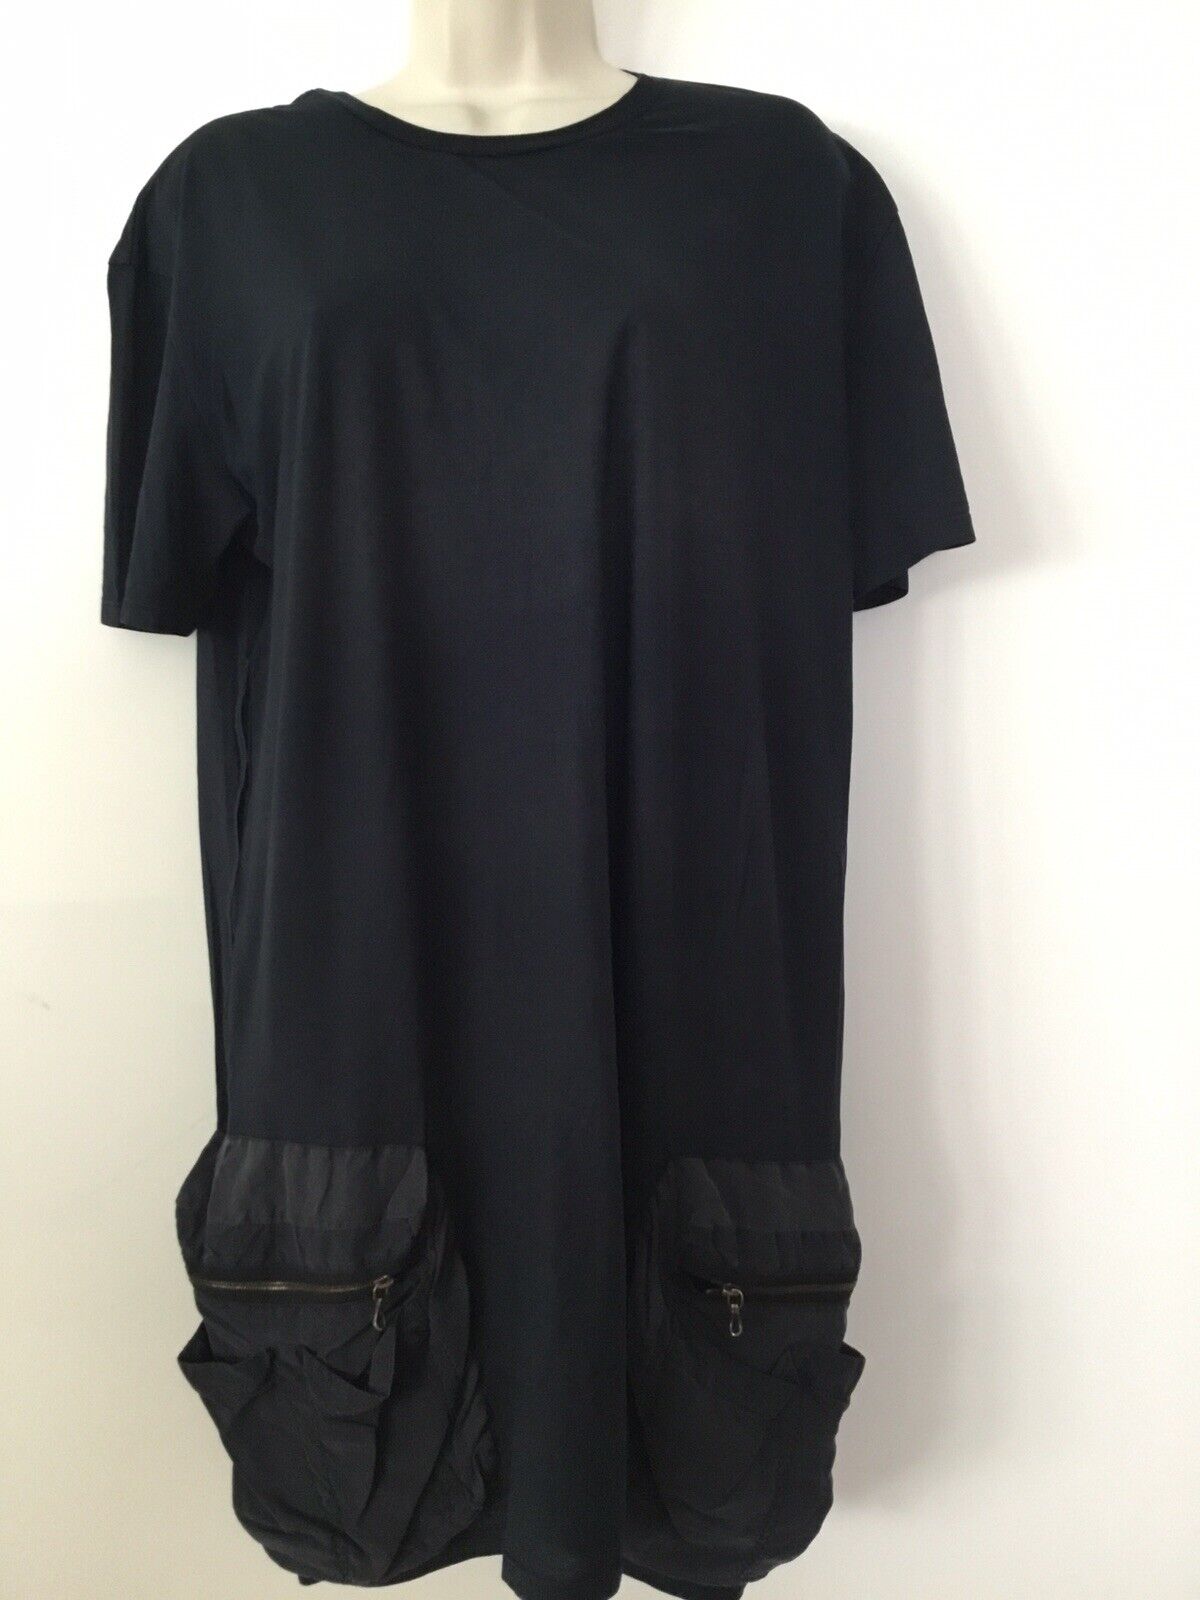 Lanvin Paris Cotton Silk Side pockets  Top Shirt  Size :L Made in France.